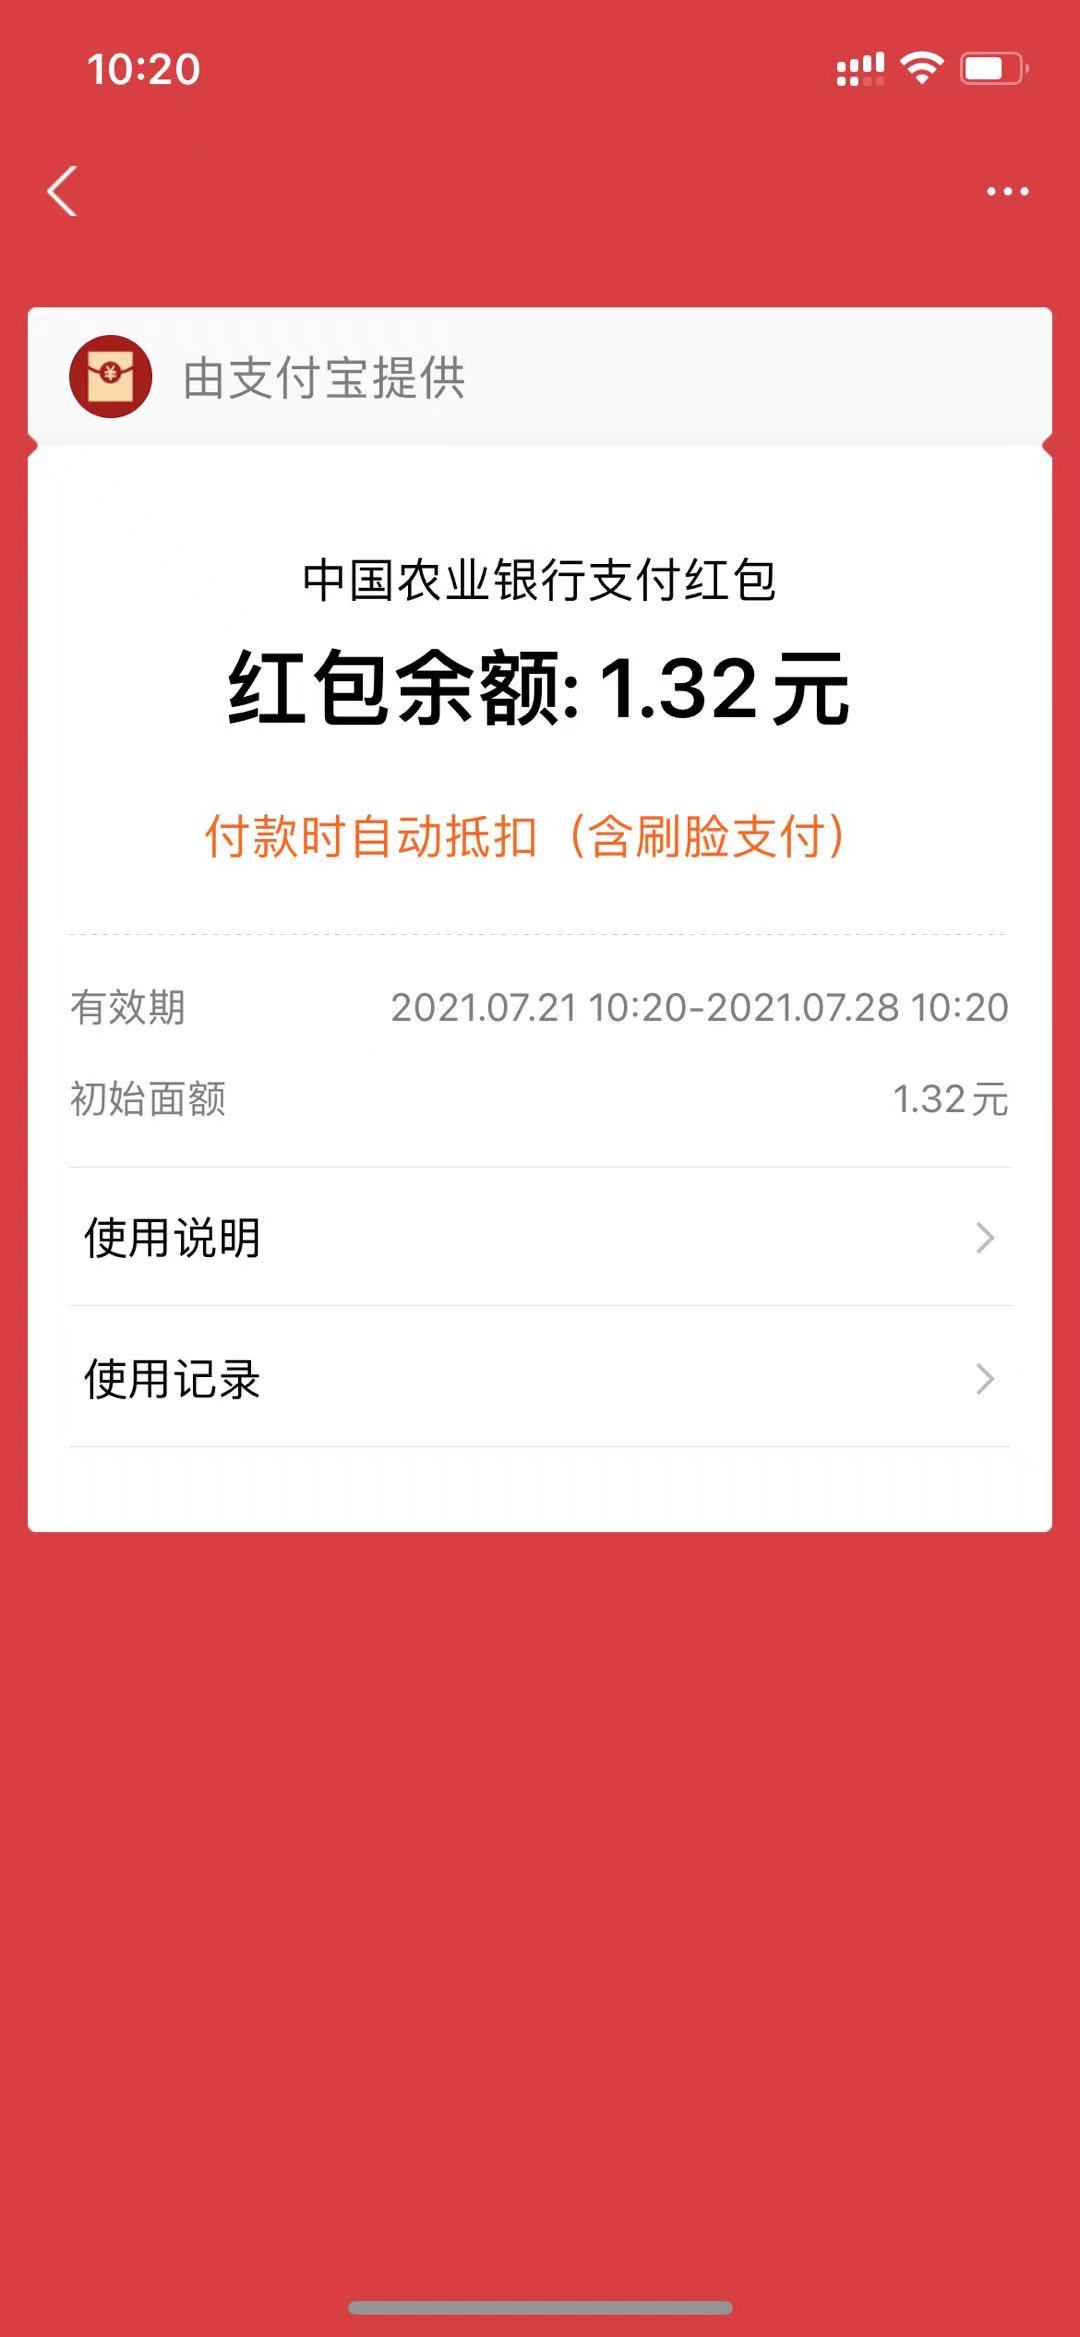 zfb提现农行卡最高15元红包-惠小助(52huixz.com)